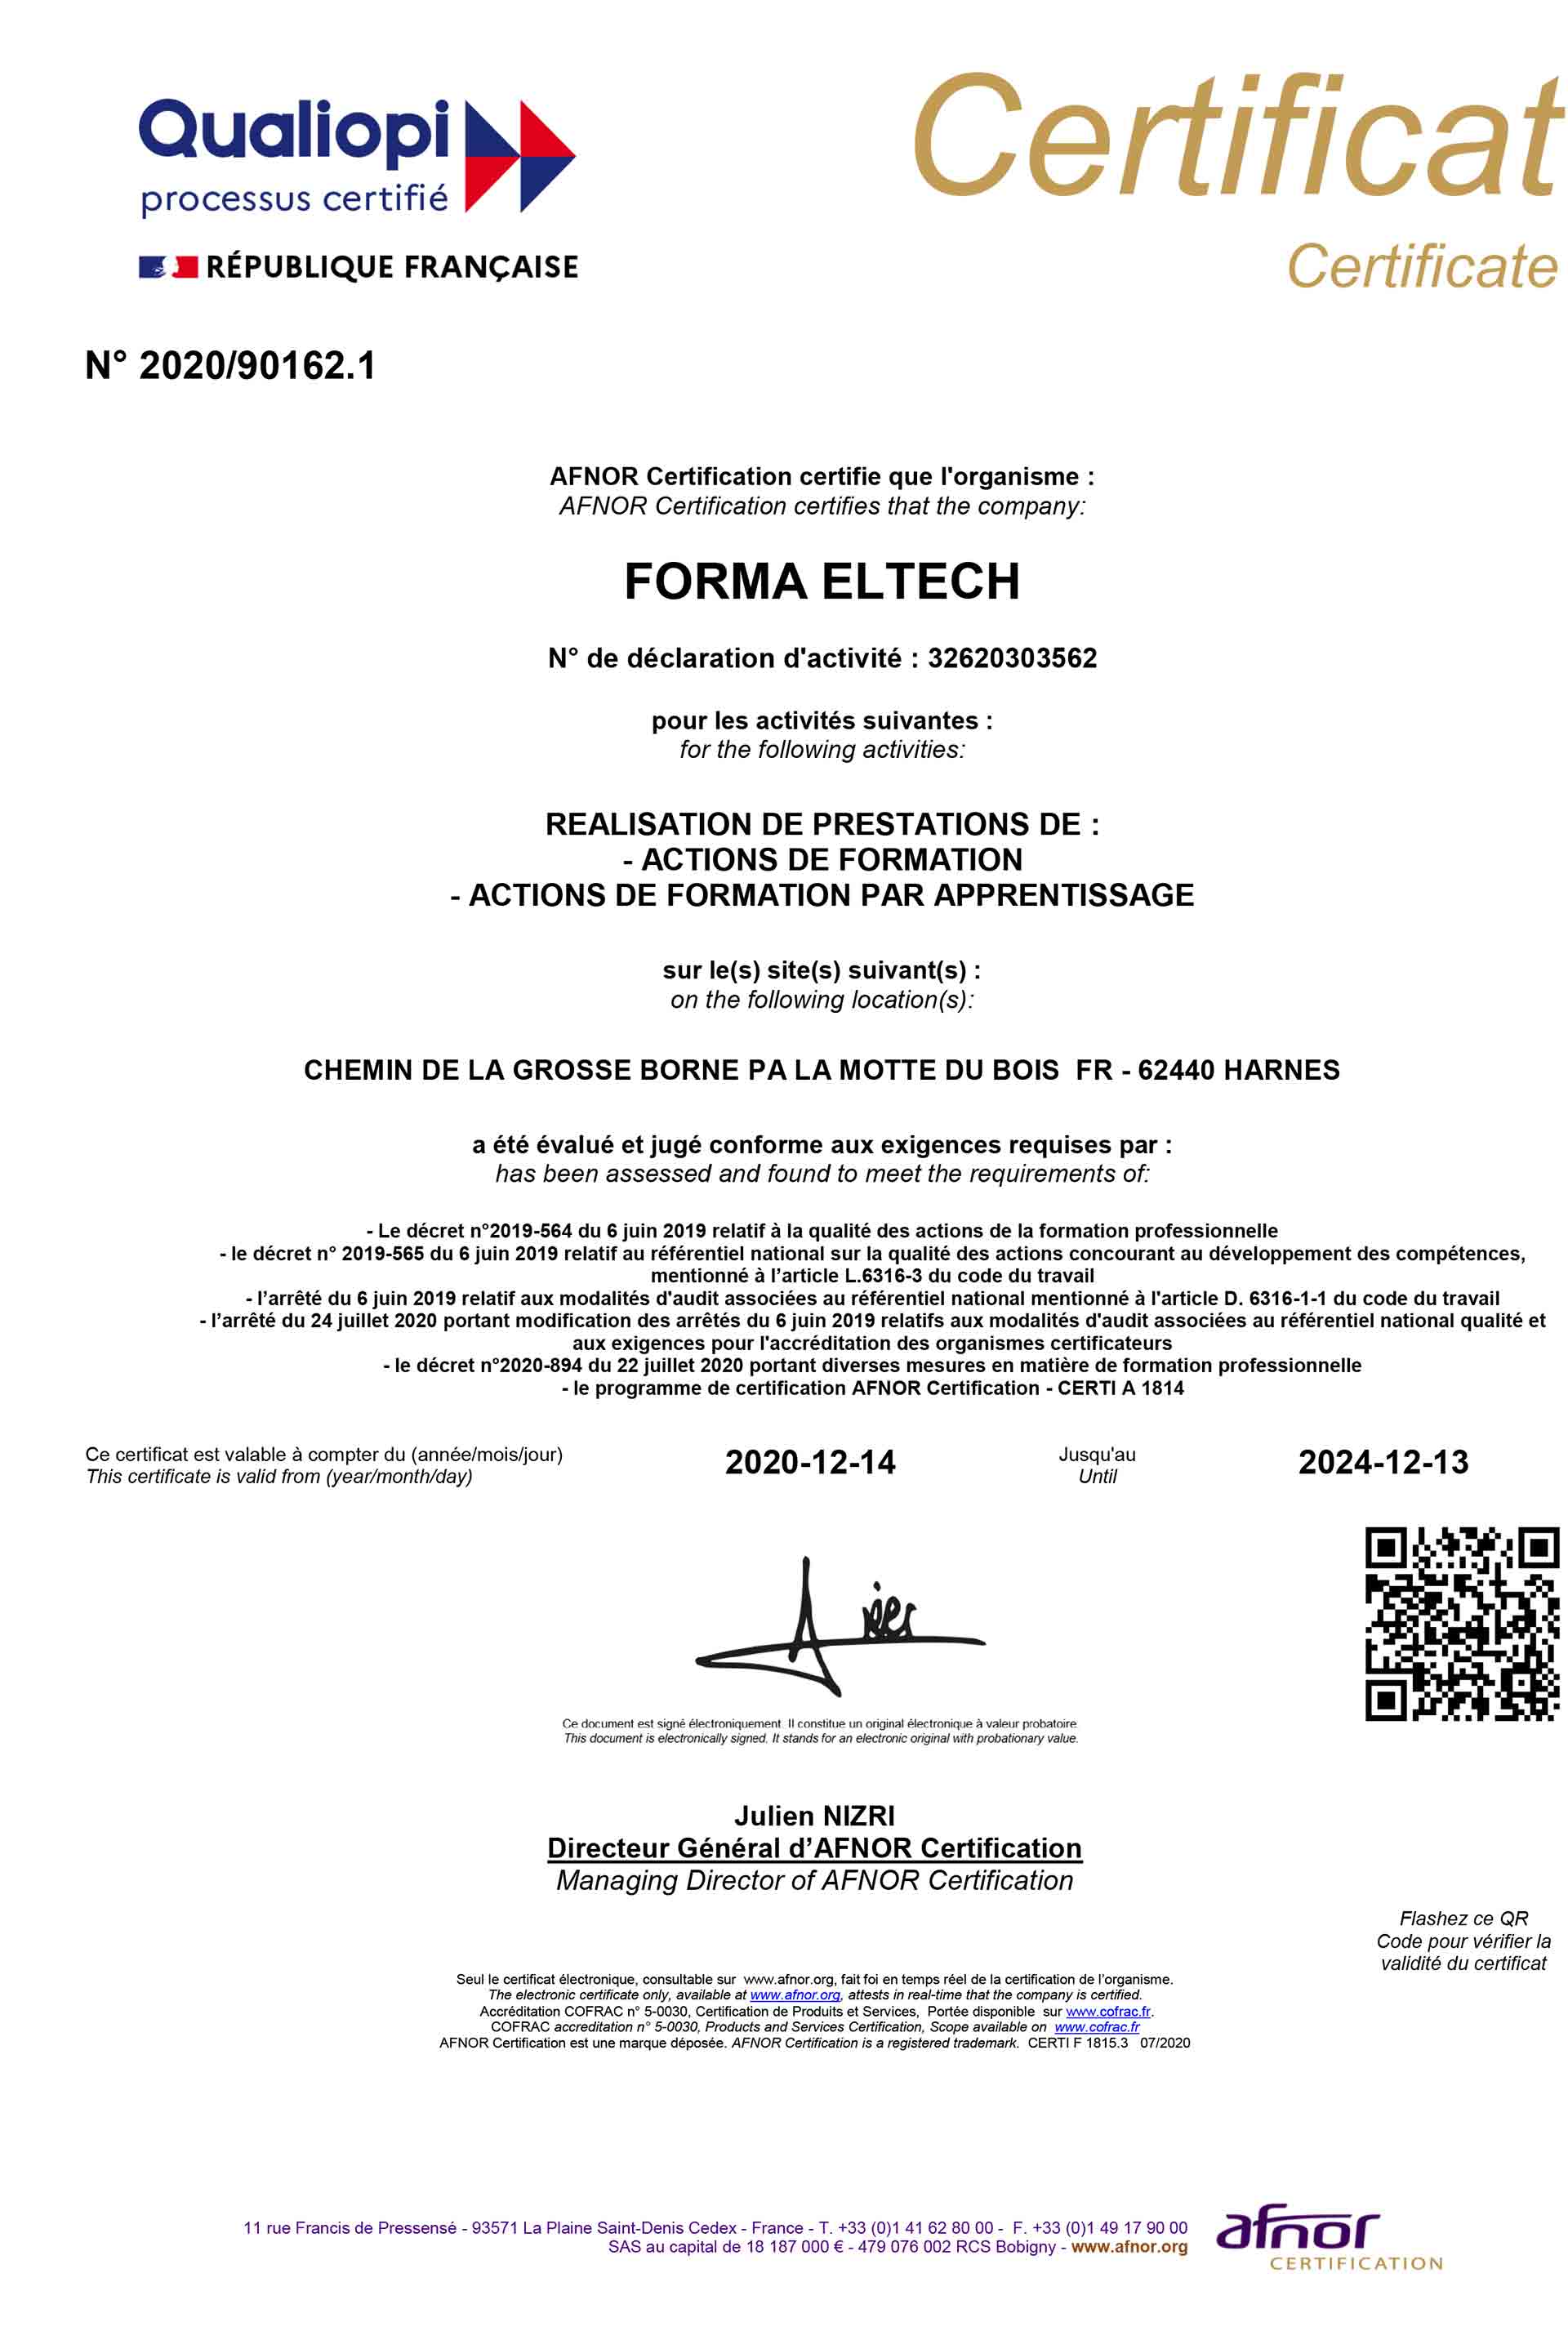 Certification Qualiopi de Forma Eltech